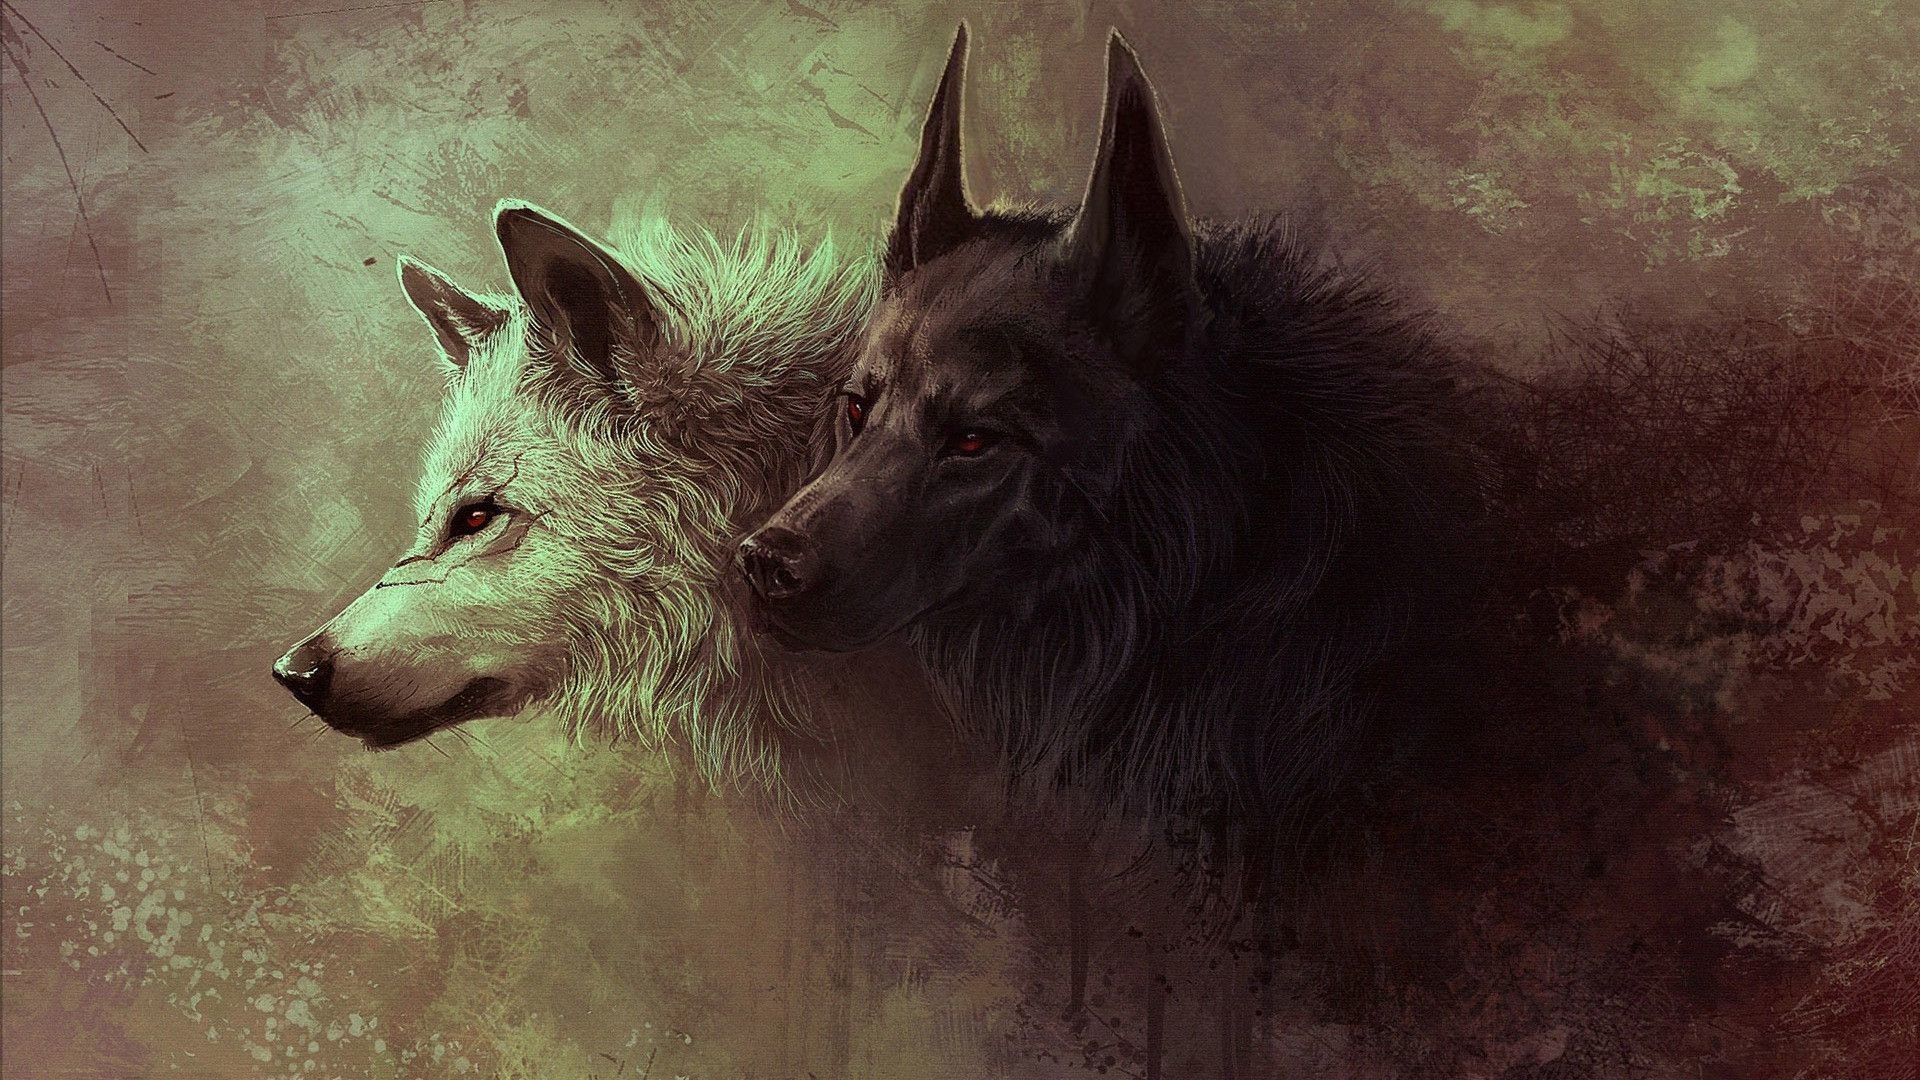 1920x1080 Best 25 Wolf wallpaper ideas on Pinterest | Wolf dogs, Sketches .